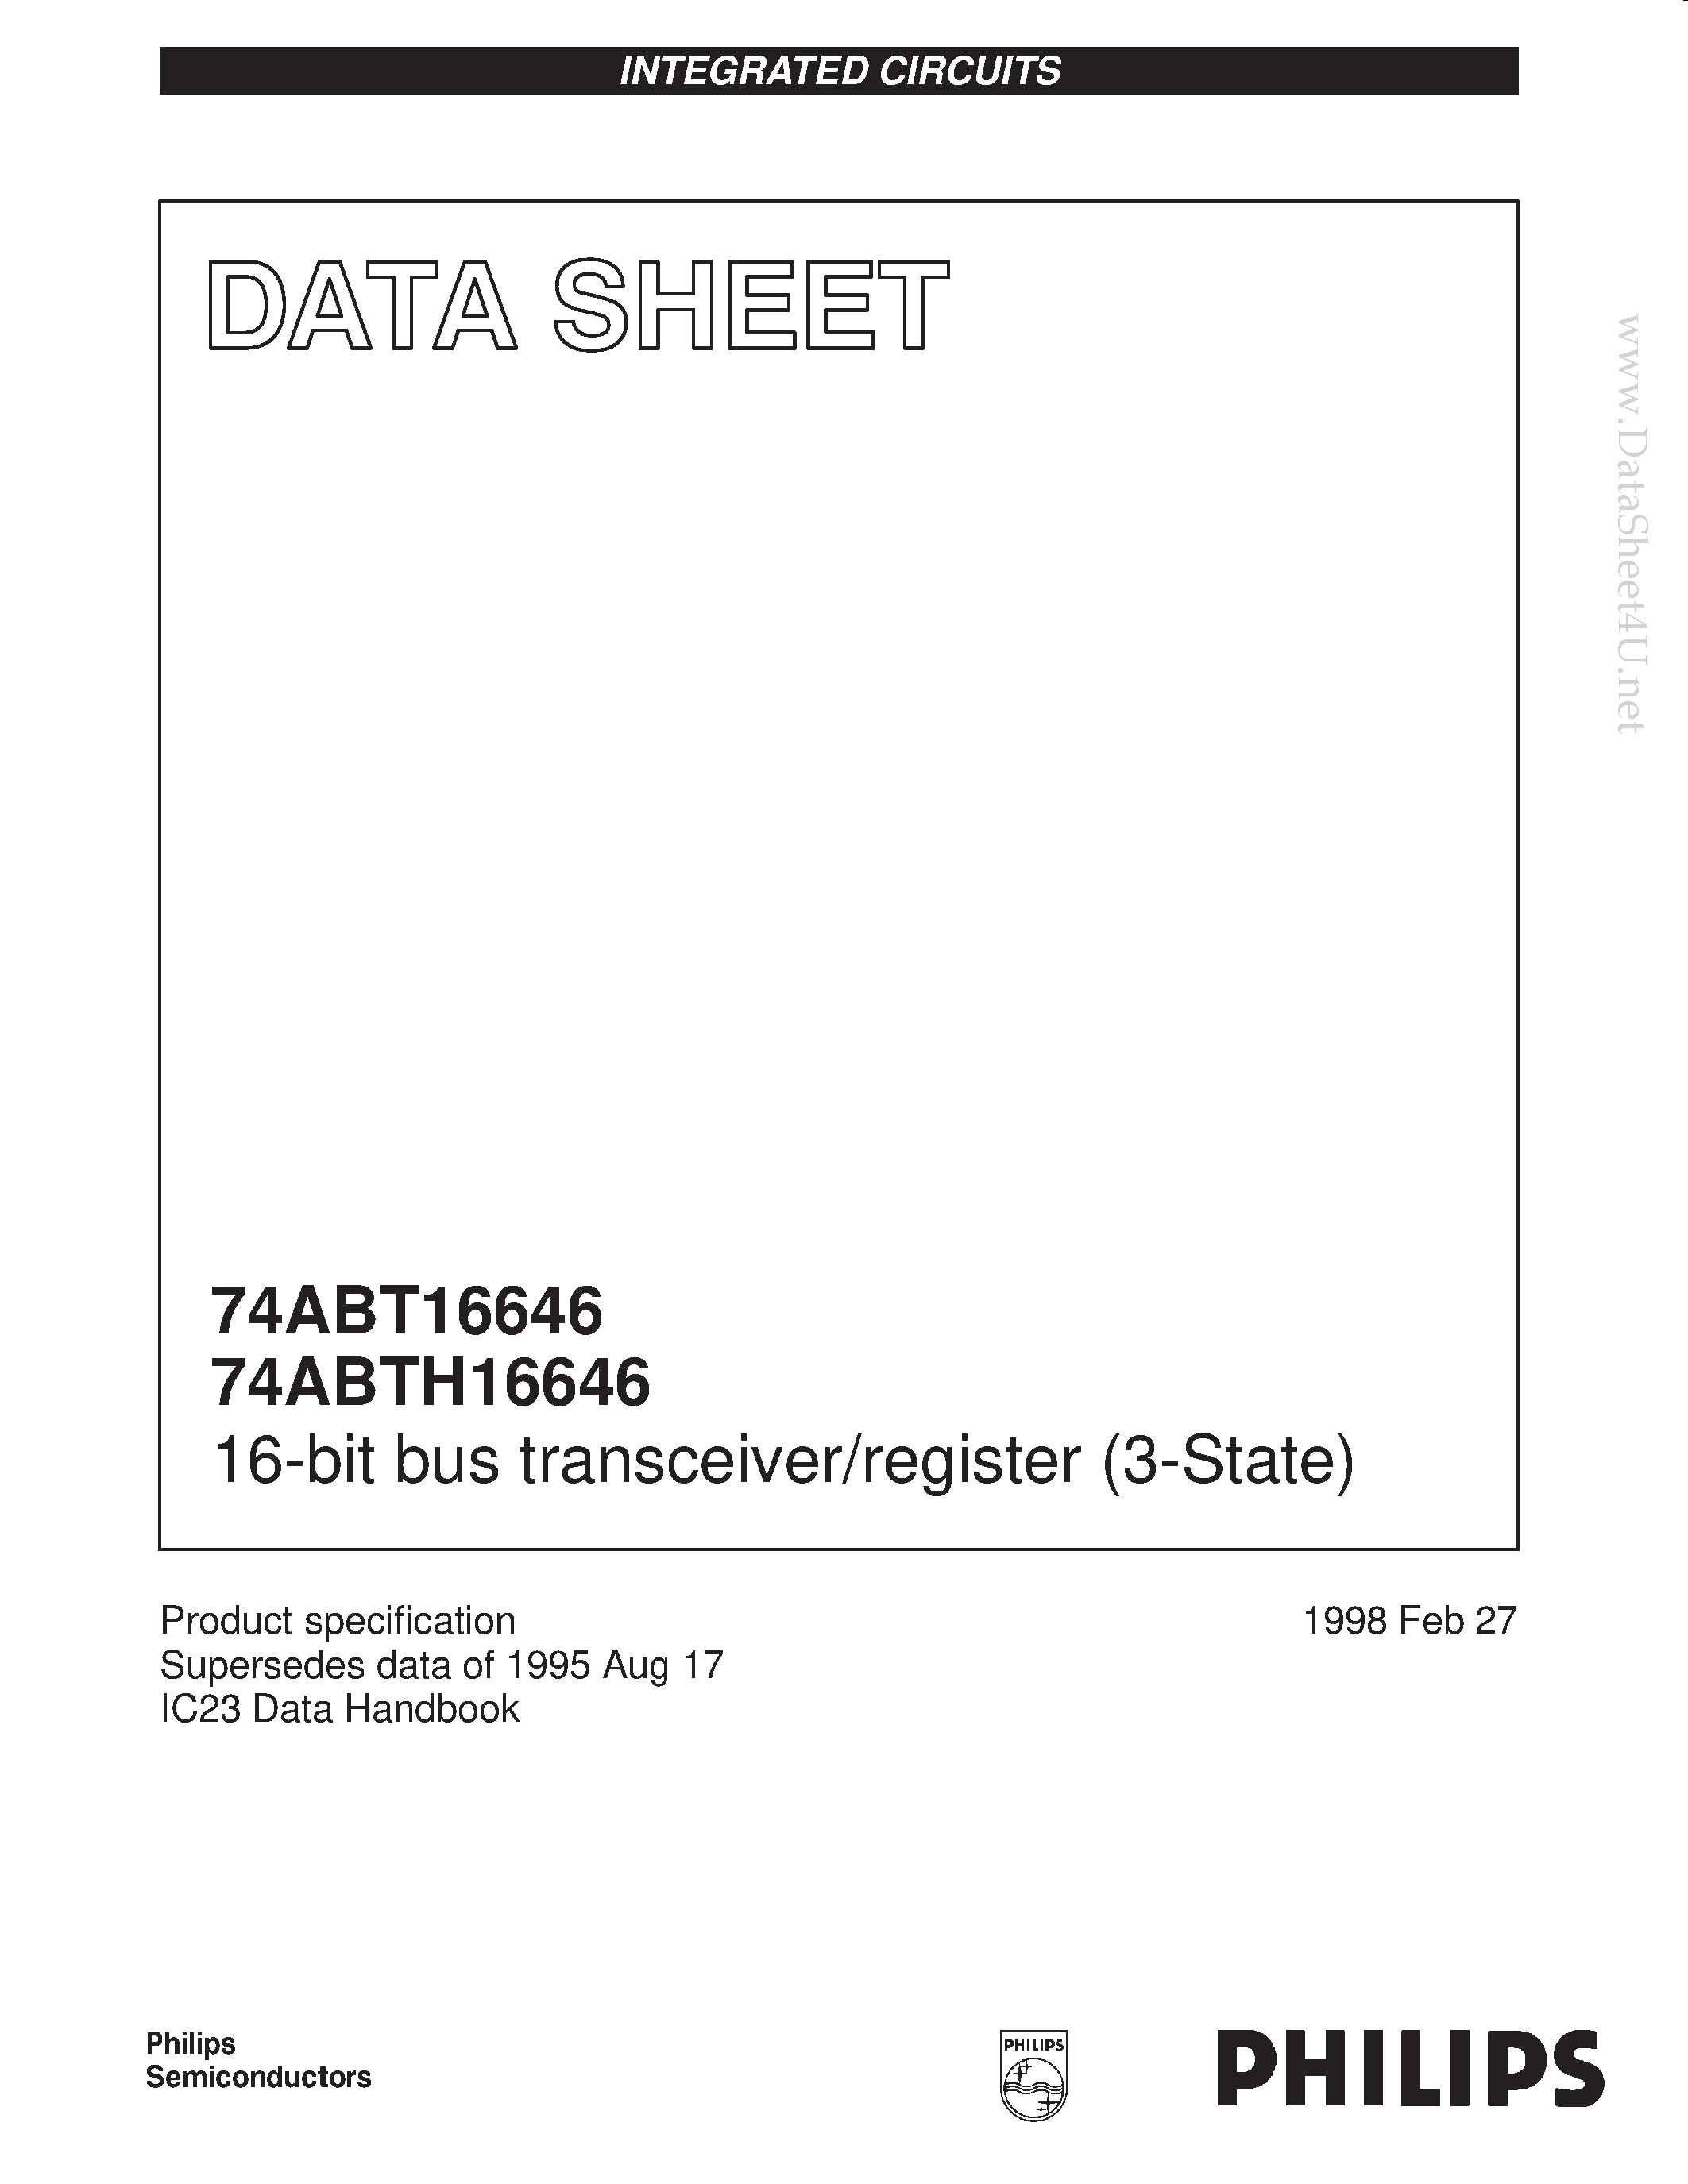 Даташит 74ABTH16646 - 16-bit bus transceiver/register 3-State страница 1